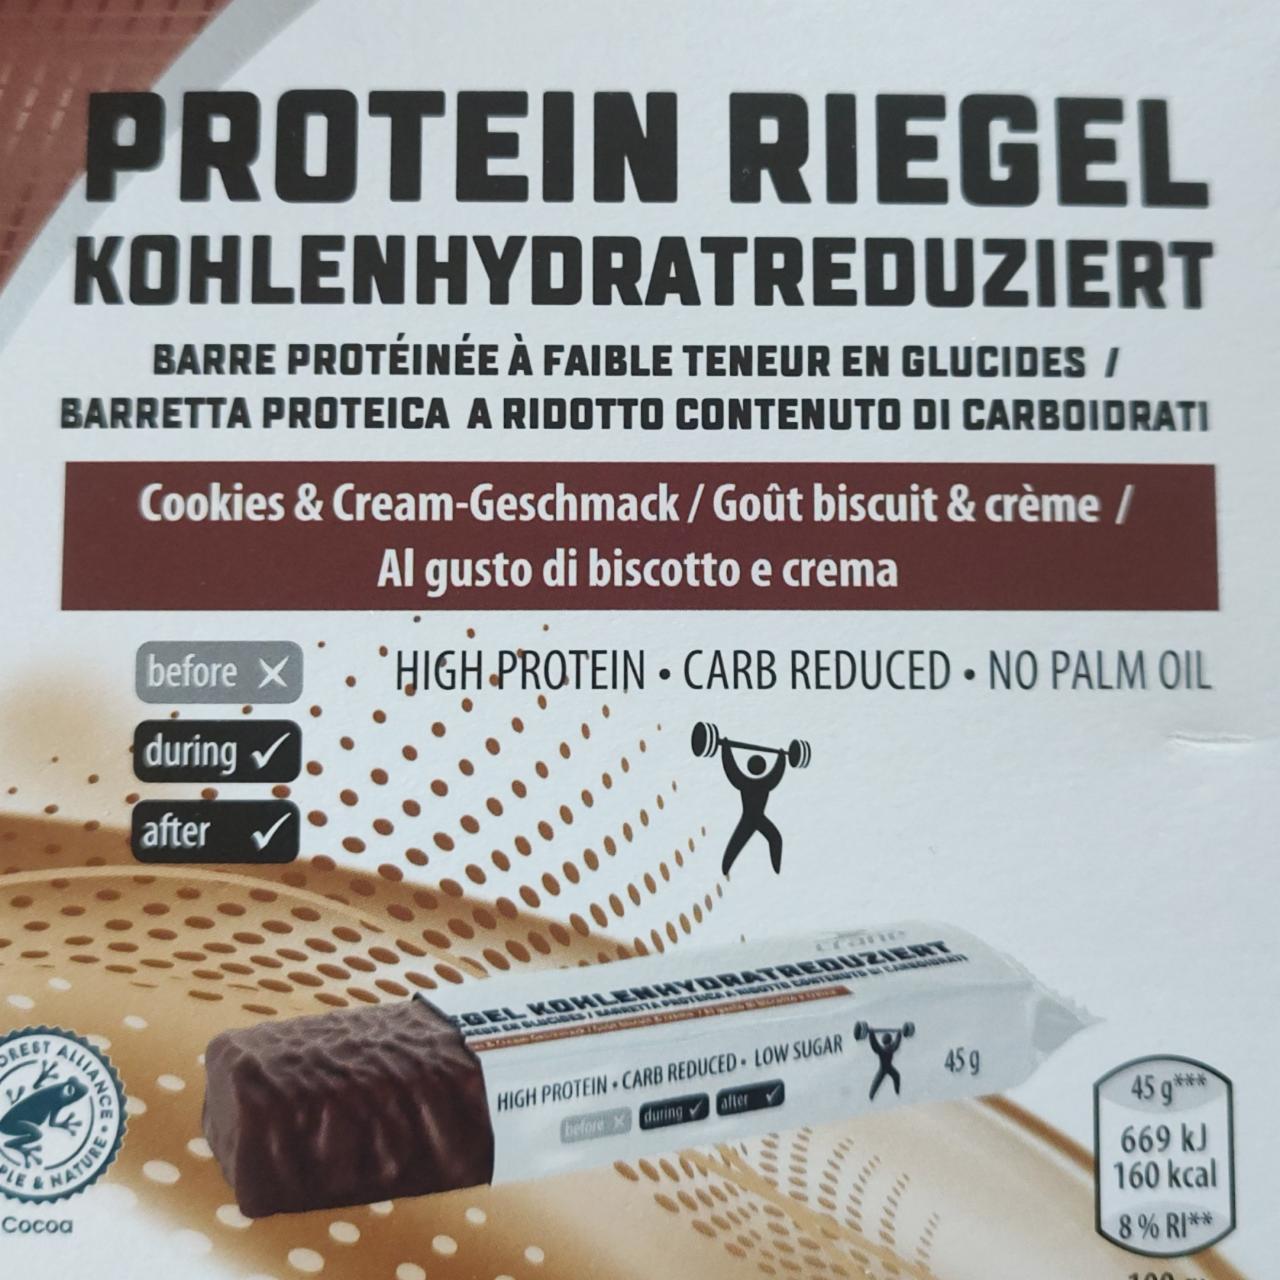 Fotografie - Protein riegel kohlenhydratreduziert Cookies & cream geschmack Crane